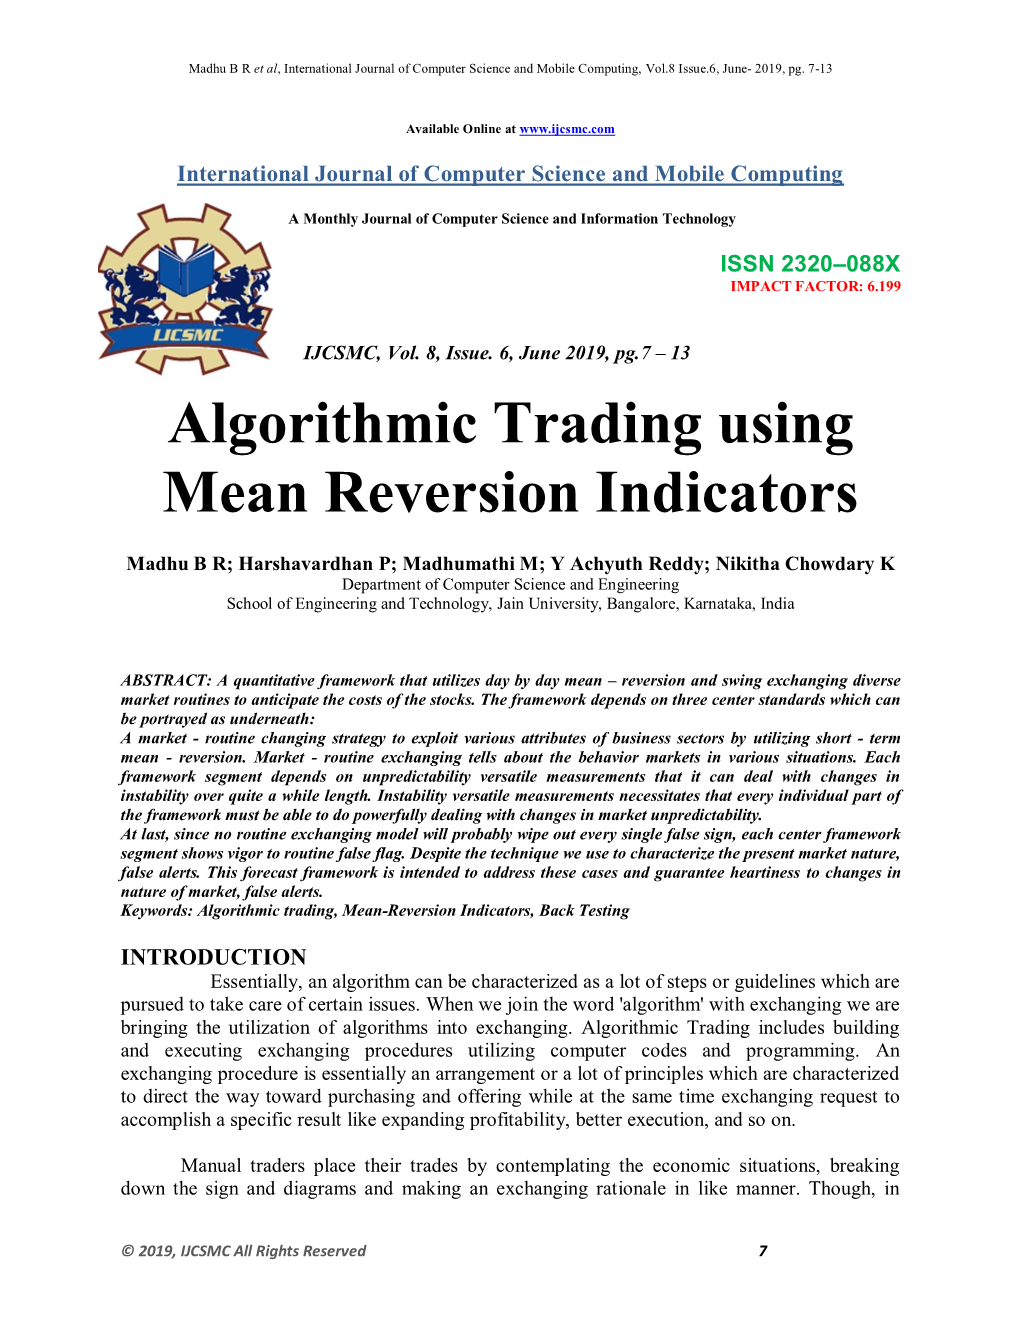 Algorithmic Trading Using Mean Reversion Indicators